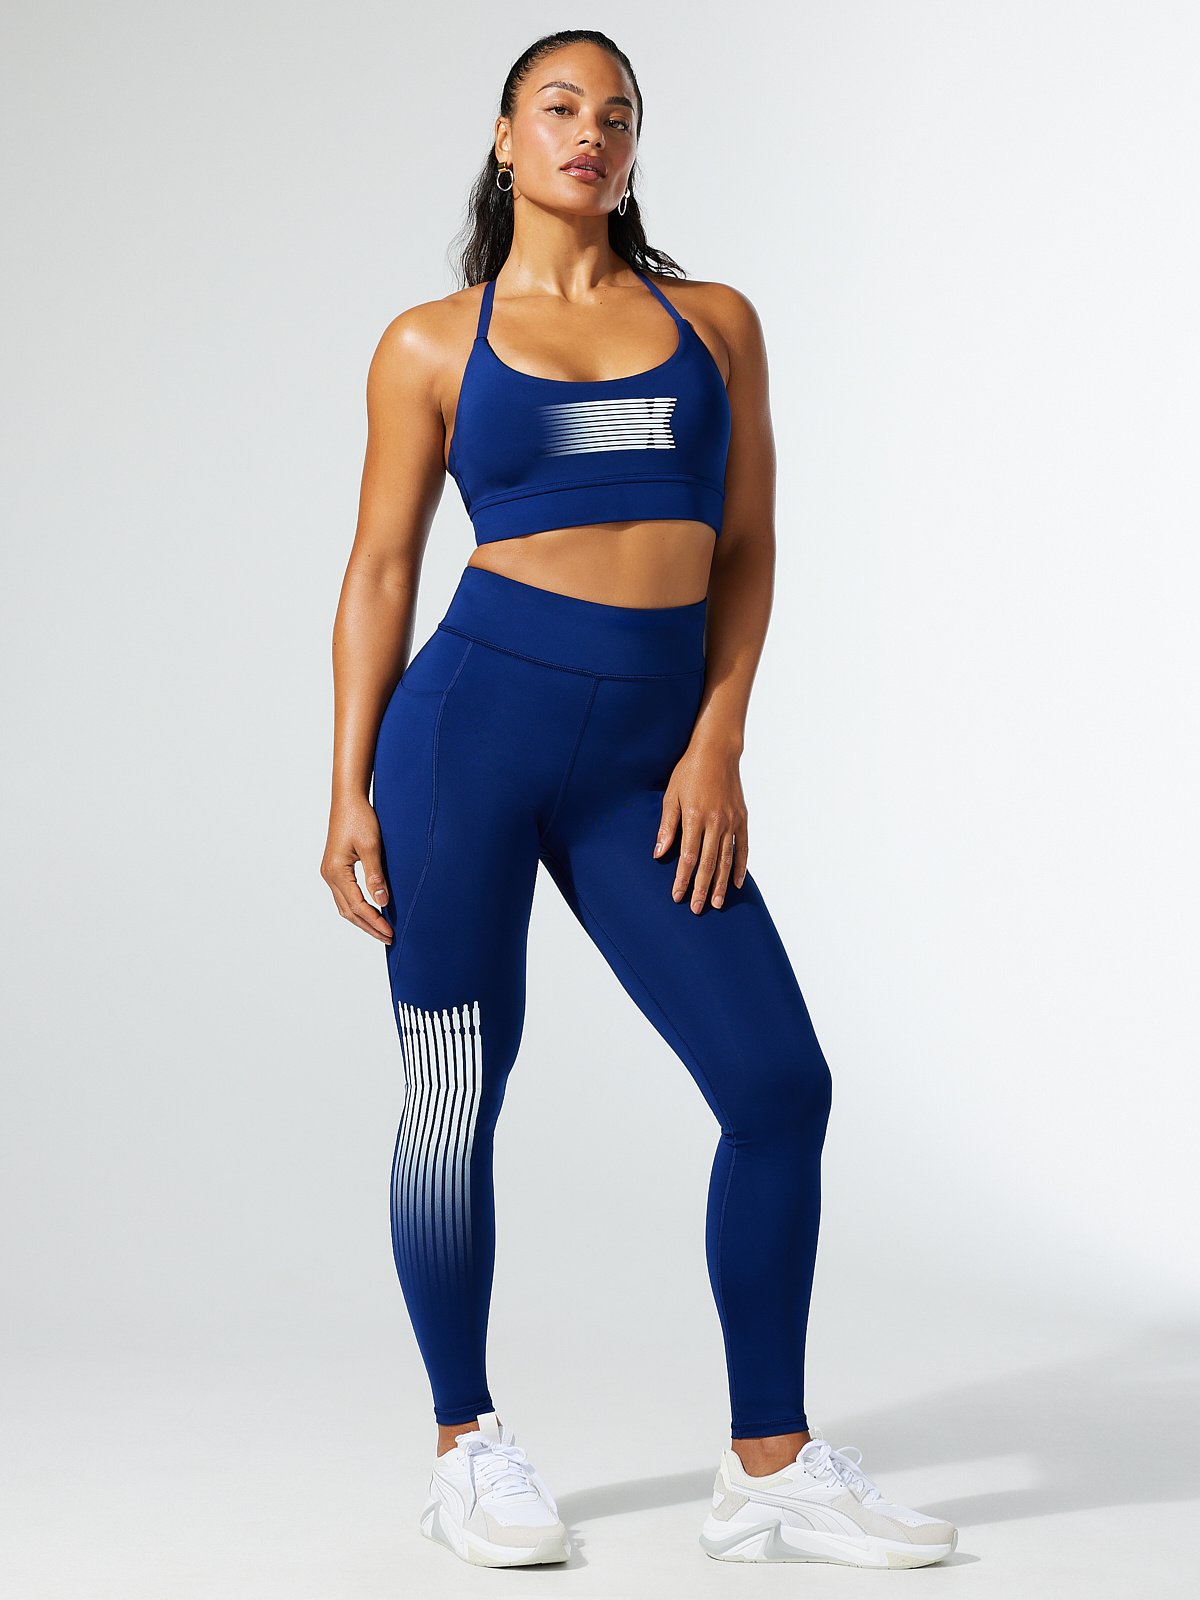 Nike Women's icon clash Zebra Print crop pants training PLUS SIZE 2x BLUE